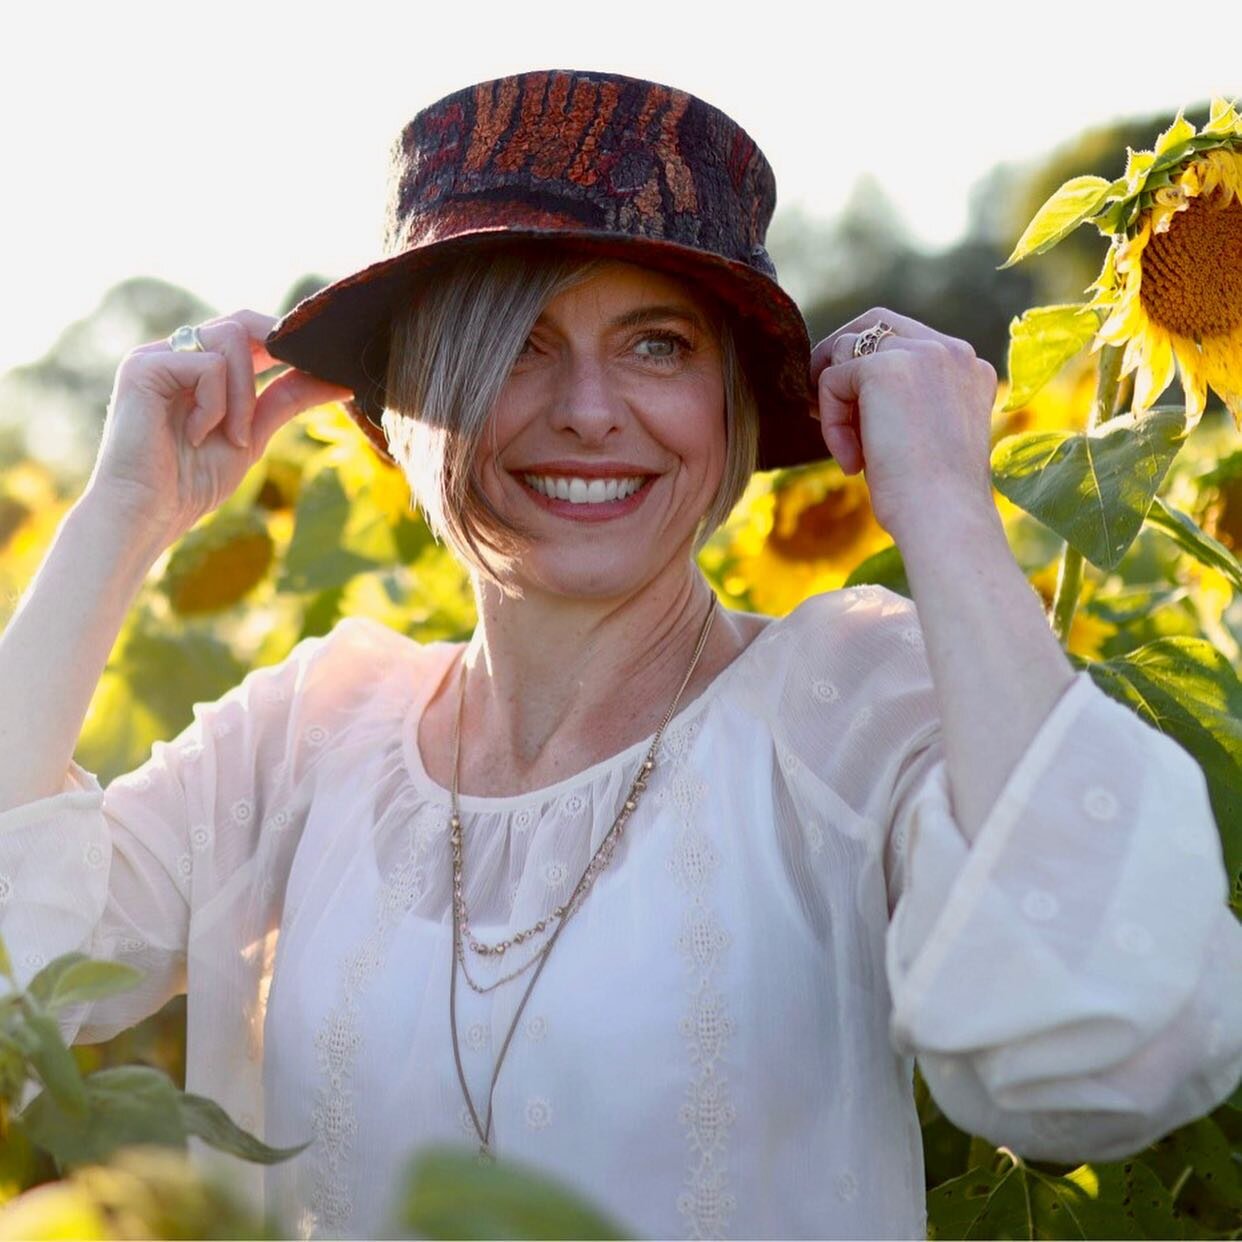 Beautiful evening at Gorby Sunflowers with great friend, Lori, modeling one of my nuno-felted hats. 
Model, Lori Zamora; Photographer, Brittany Metz. 
#millinery #millinerycouture  #feltsoright_dawnedwards #gorbysunflowers 
#handmadefelt #felting #we